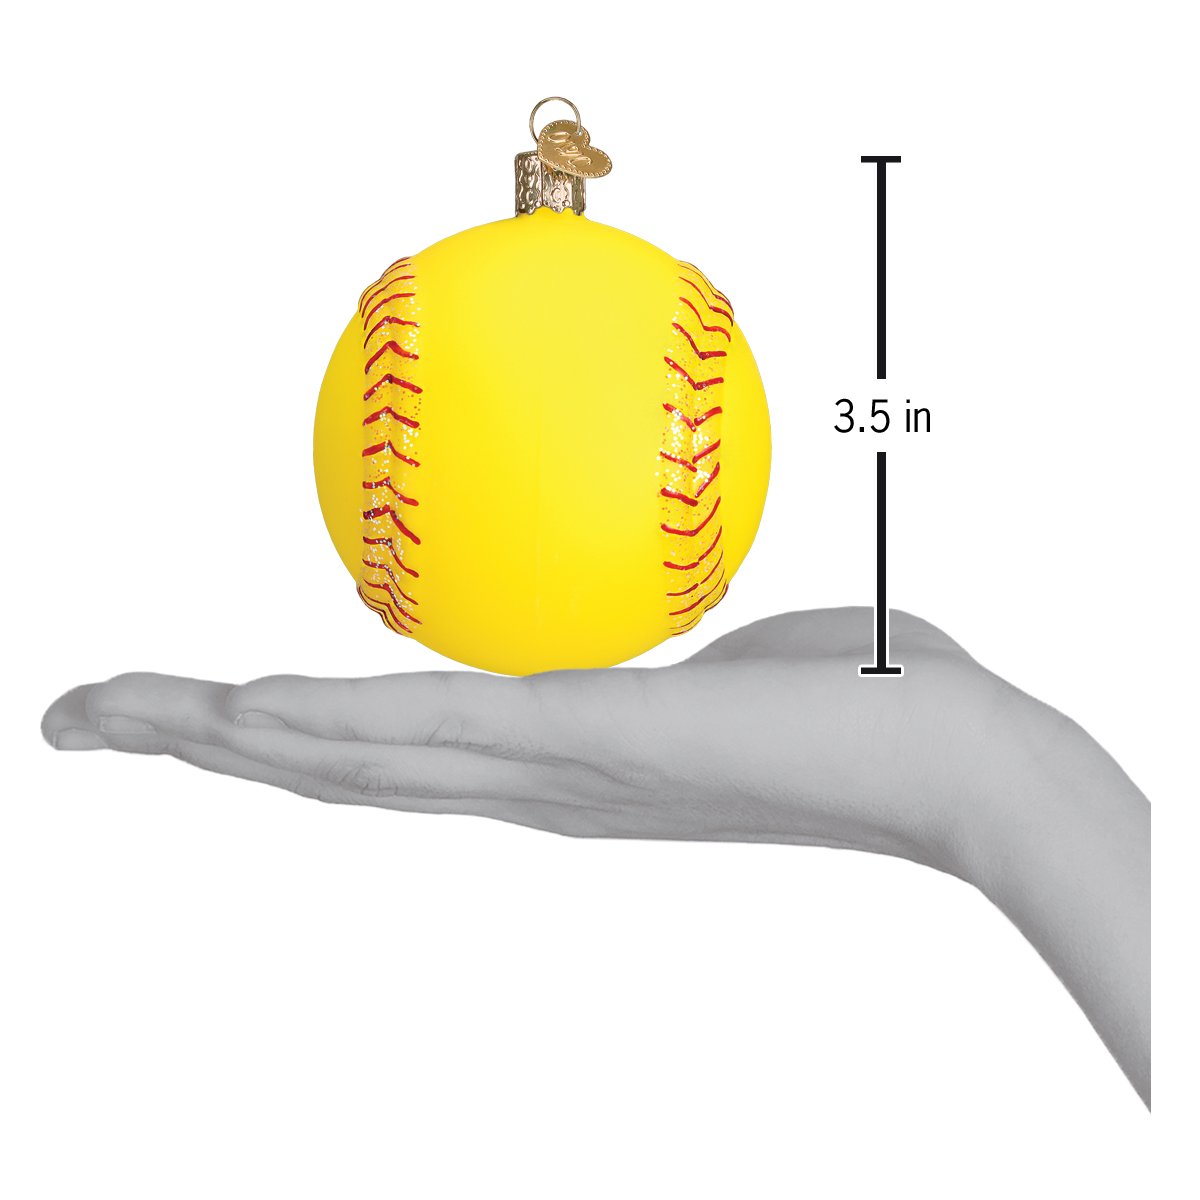 Softball Ornament